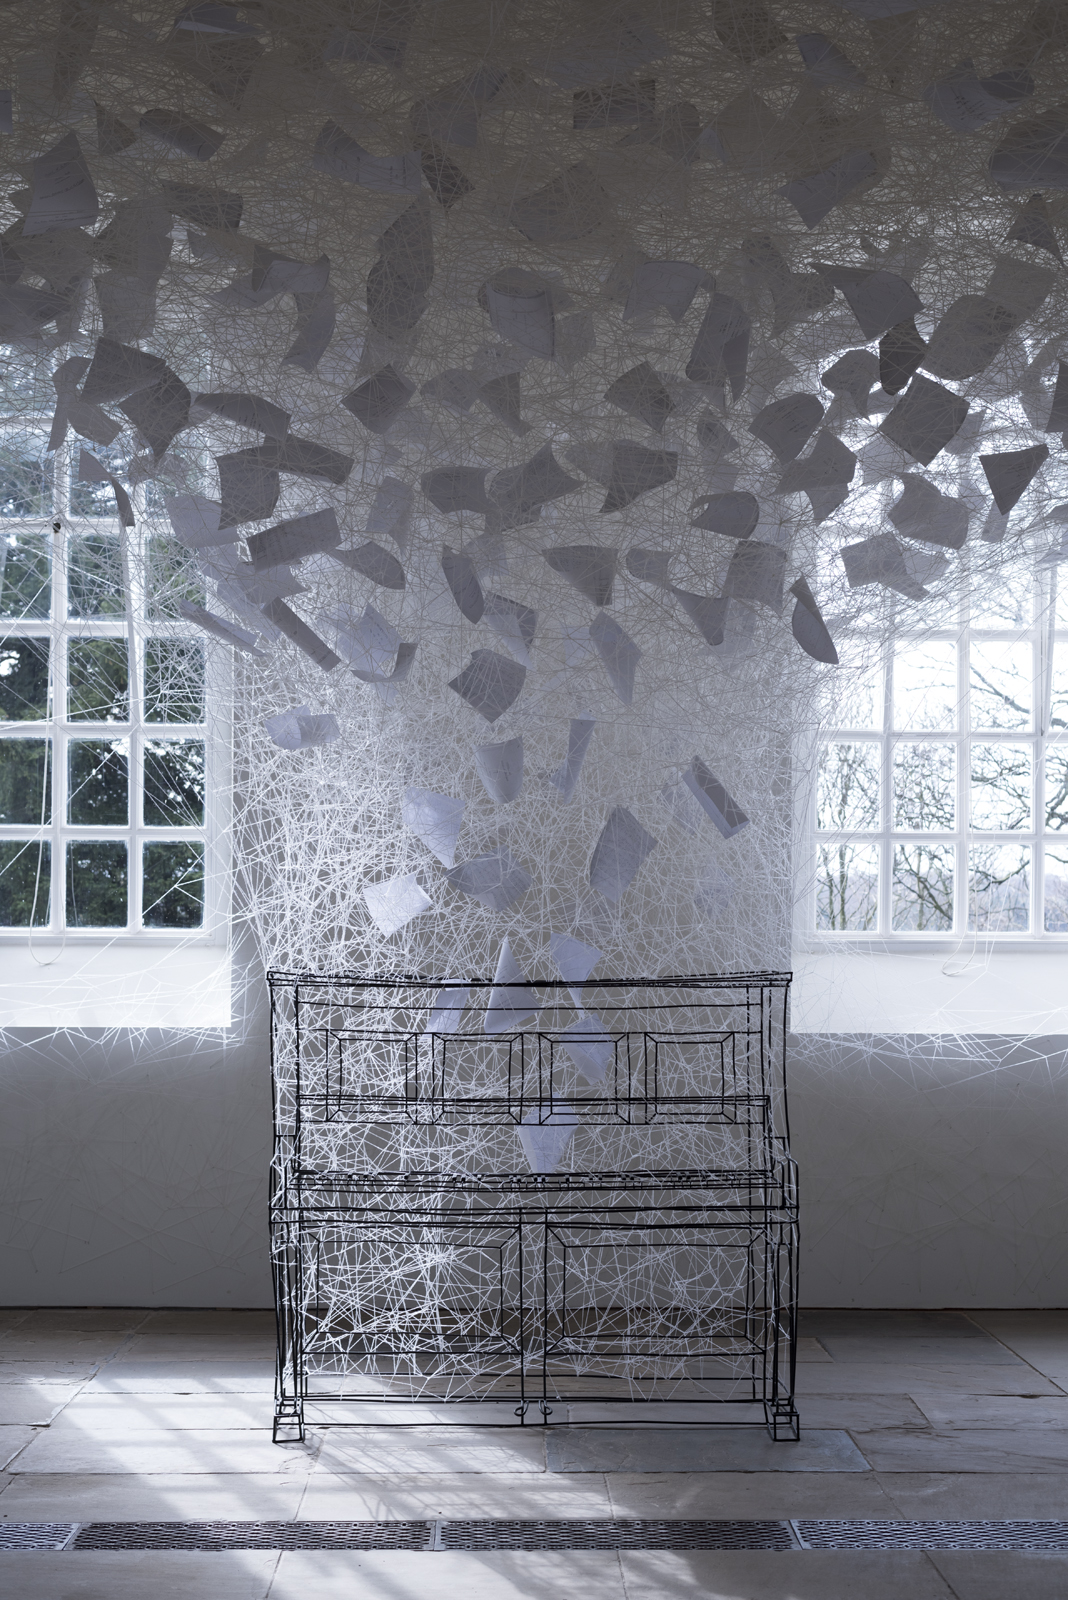 Chiharu Shiota, Beyond Time, 2018. Copyright VG Bild-Kunst, Bonn, 2018 and the artist. 